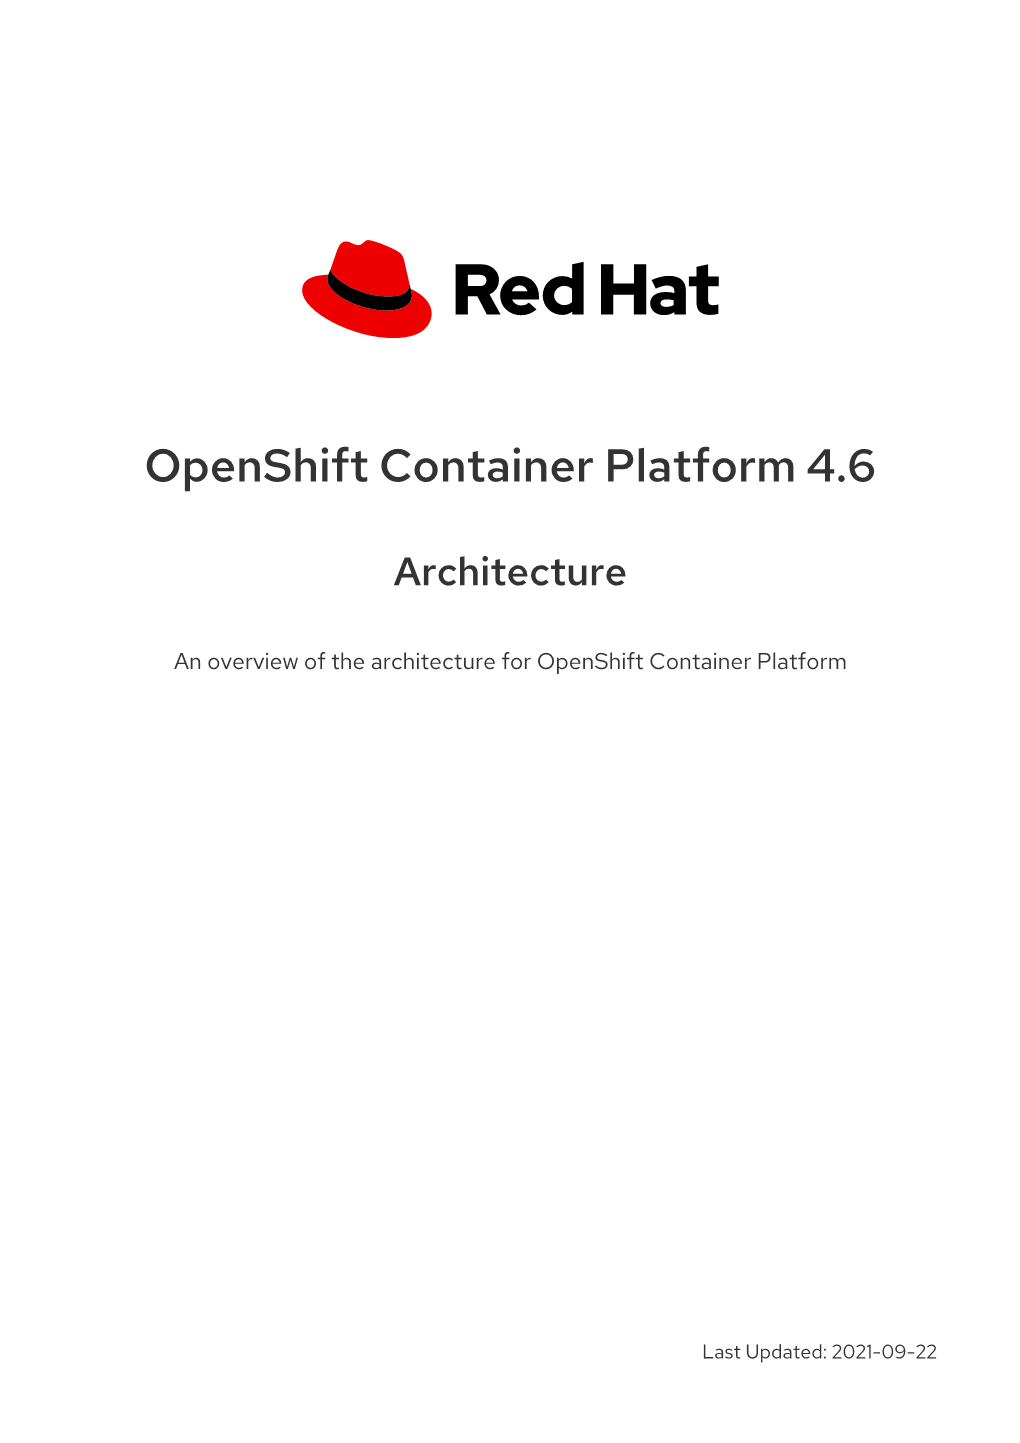 Openshift Container Platform 4.6 Architecture